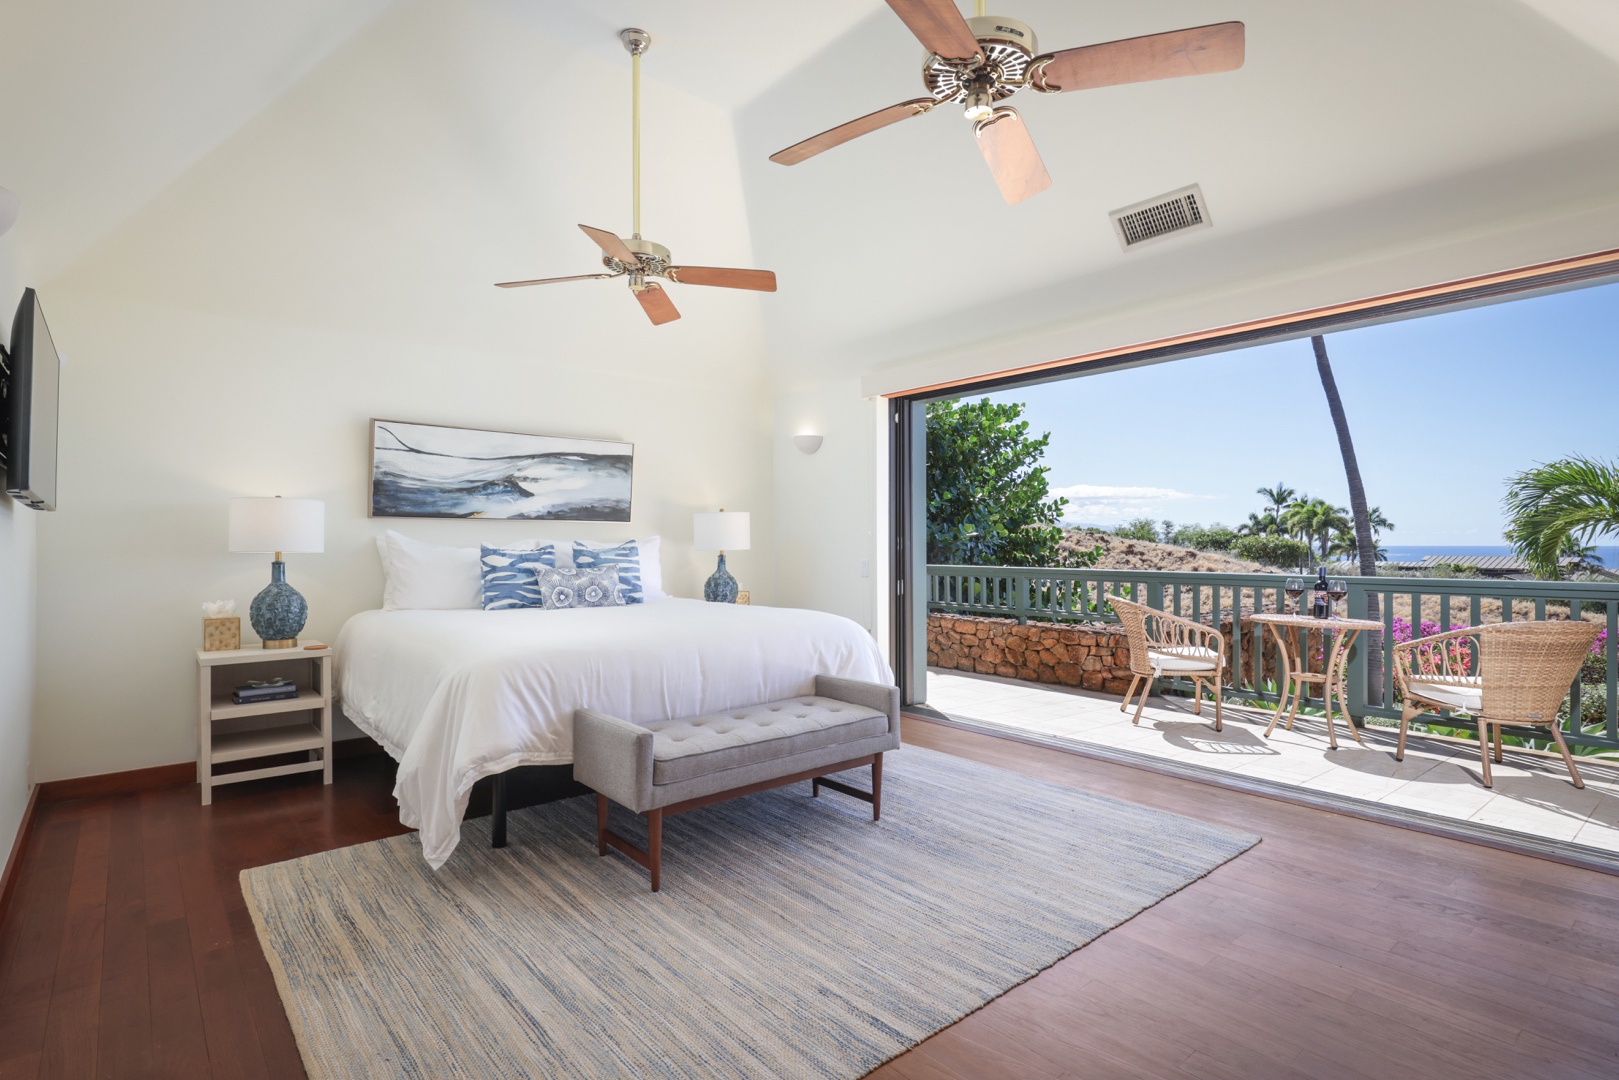 Kamuela Vacation Rentals, 4BD Fairways South Estate (29) at Mauna Kea Resort - Primary bedroom suite with king bed, lanai access, smart television & en suite bath